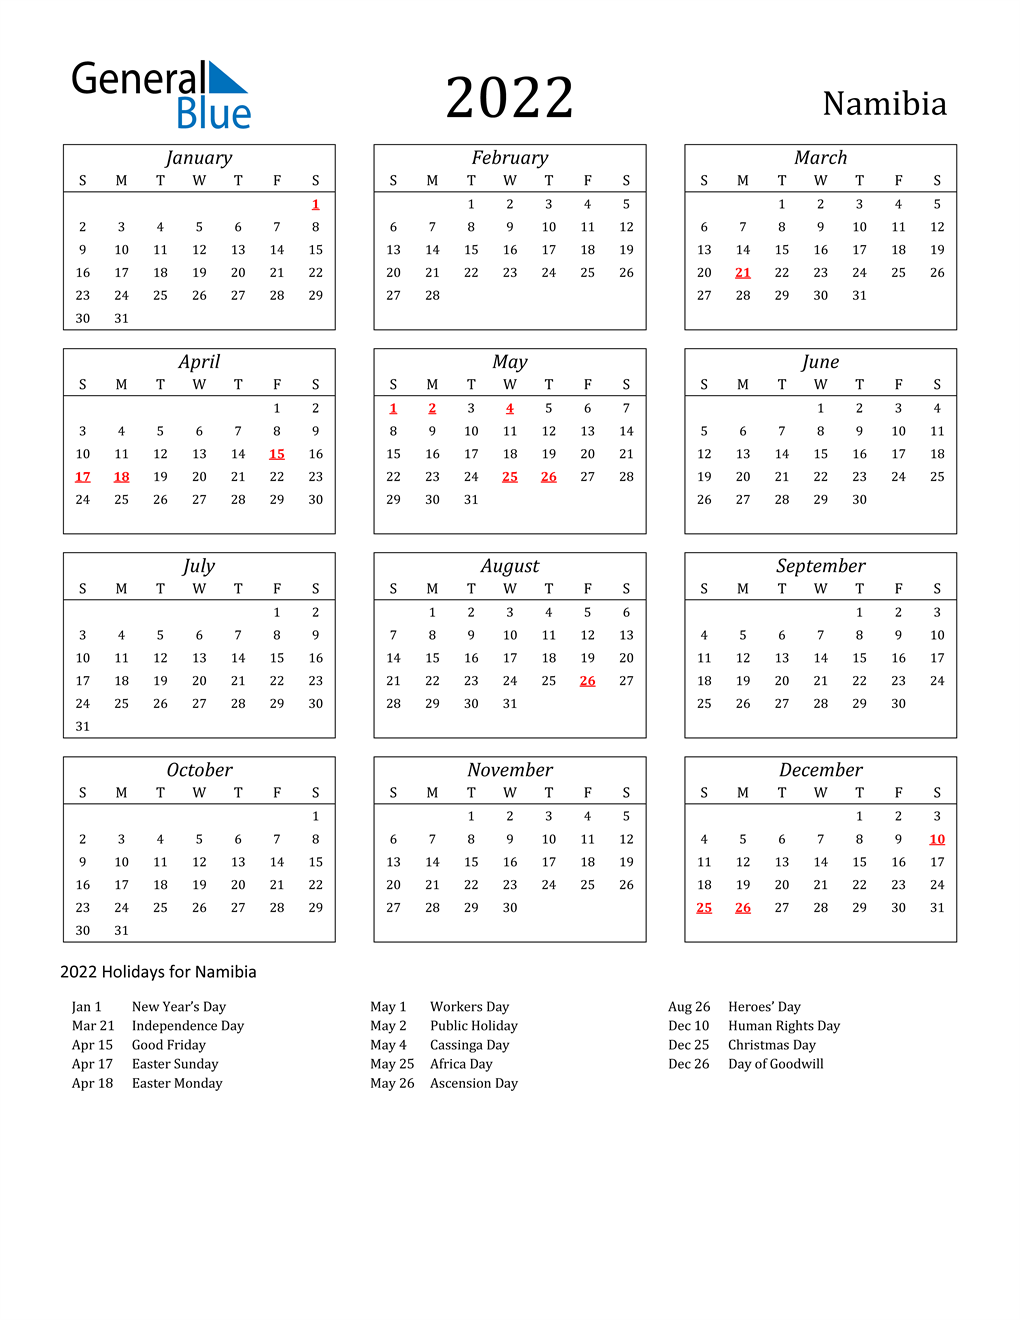 2022 Namibia Holiday Calendar